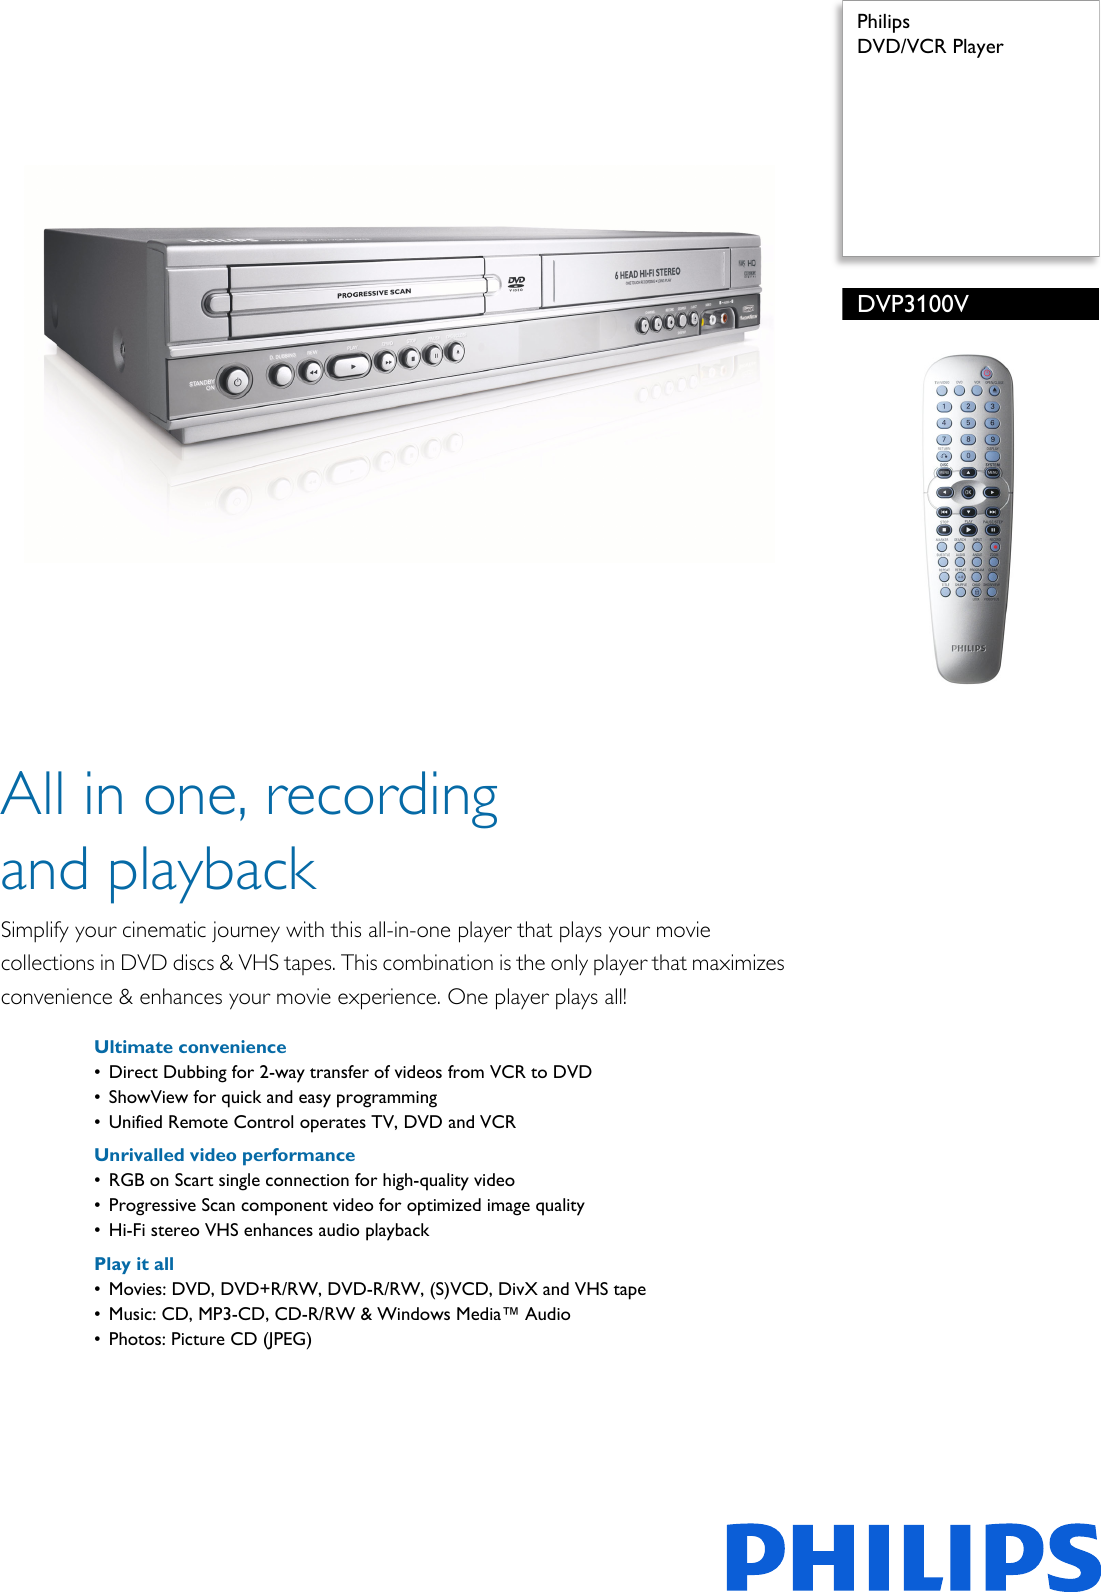 Page 1 of 3 - Philips DVP3100V/01 DVD/VCR Player Leaflet Dvp3100v 01 Pss